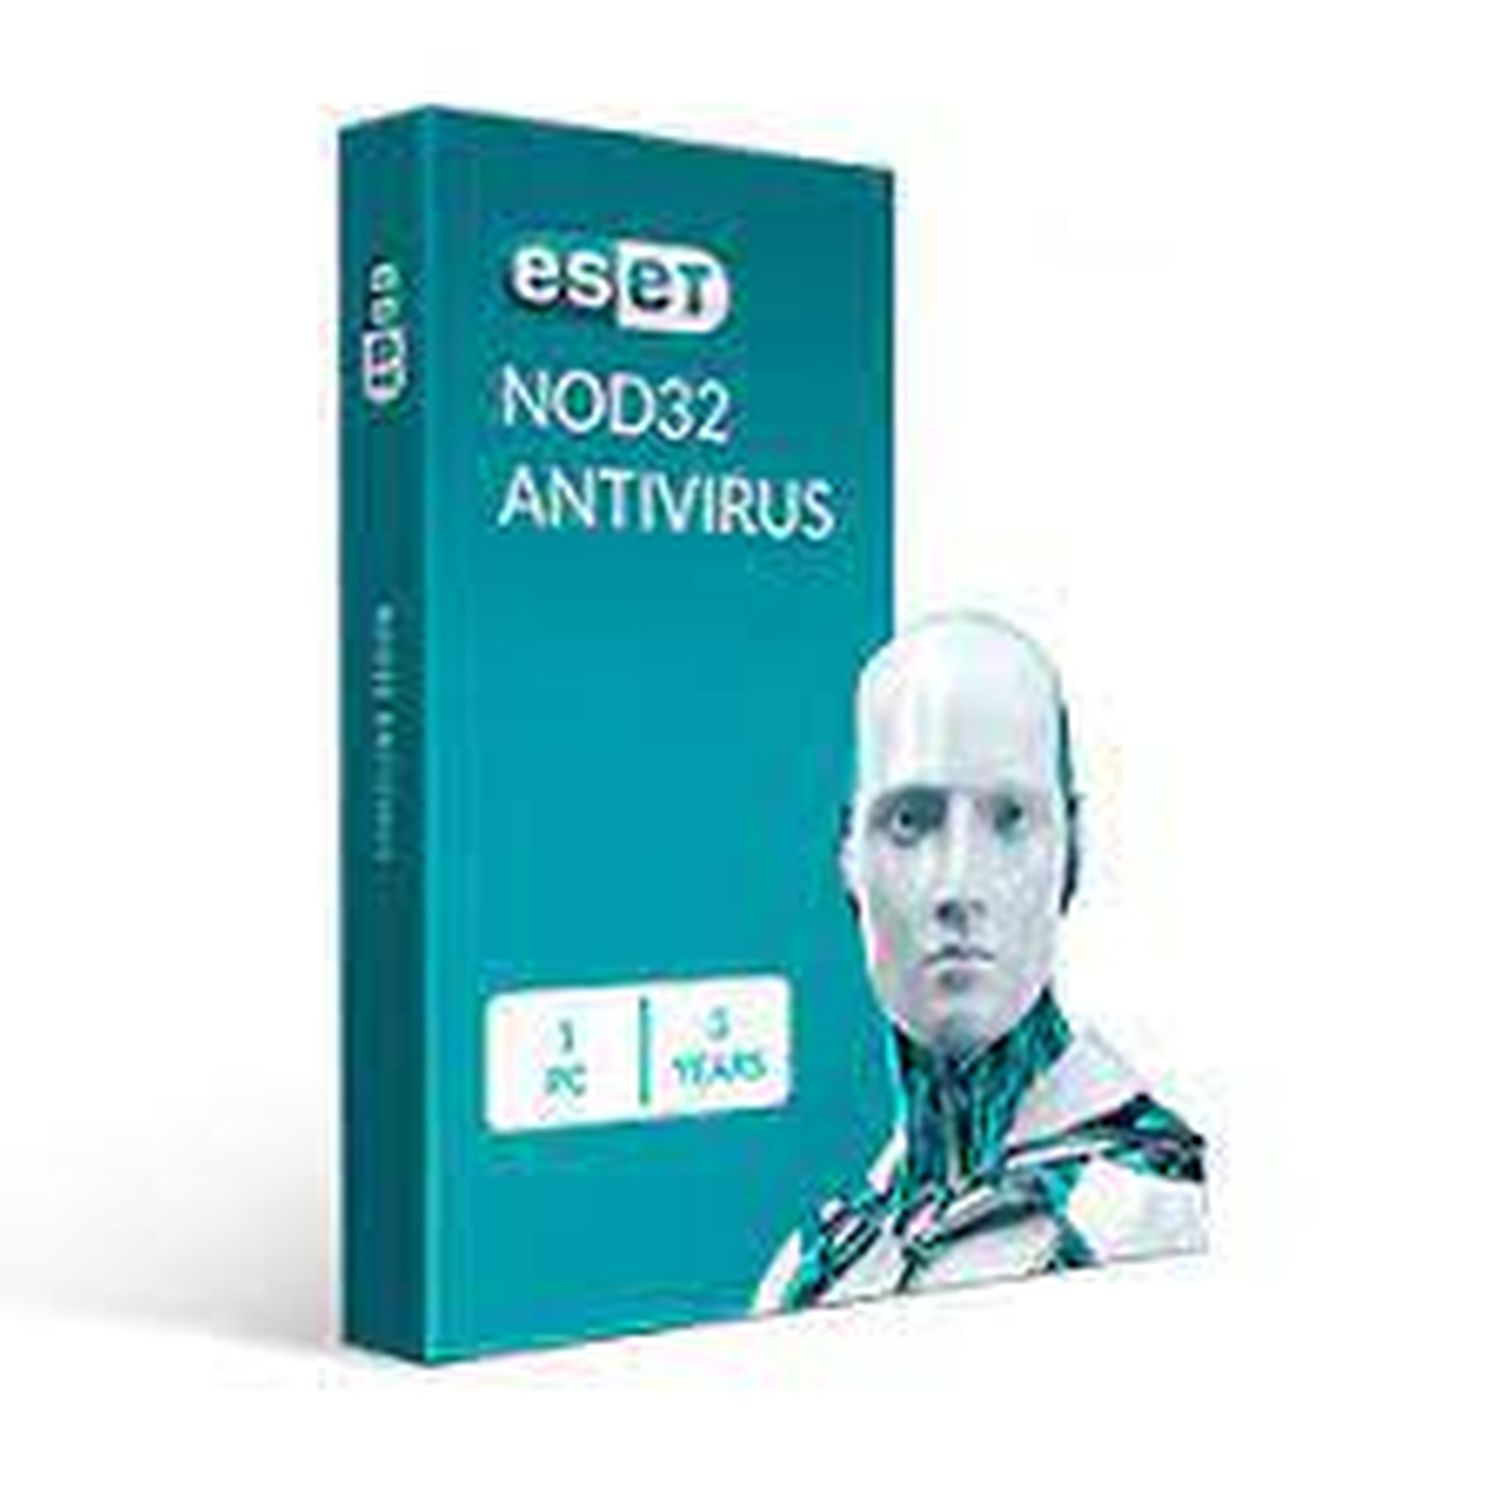 Eset - Nod32 Antivirus 3-User 1-Year Sleeve BIL PC/Mac/Linux